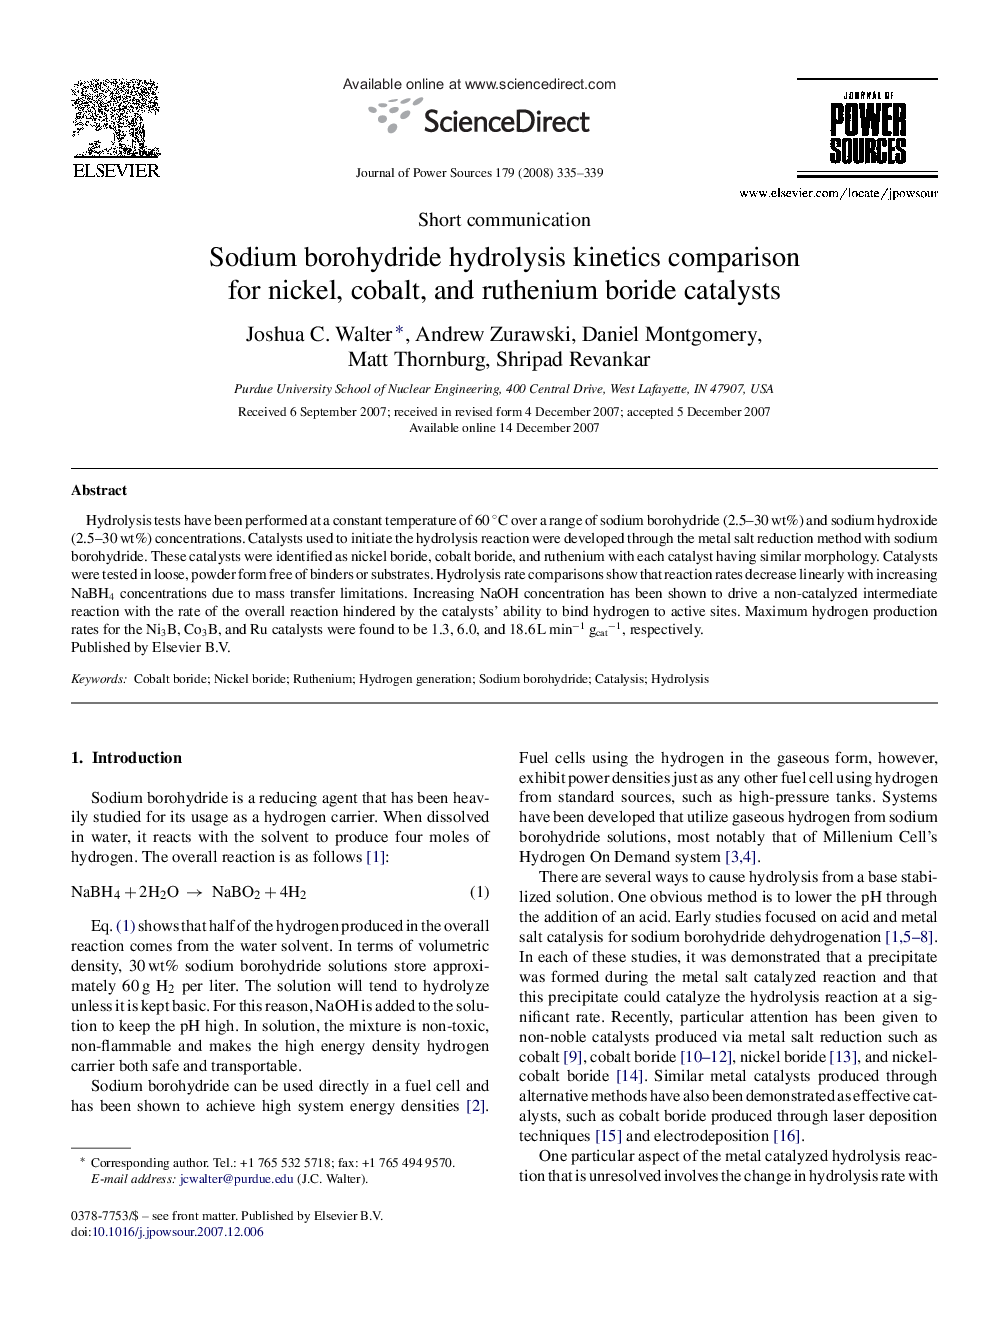 Sodium borohydride hydrolysis kinetics comparison for nickel, cobalt, and ruthenium boride catalysts